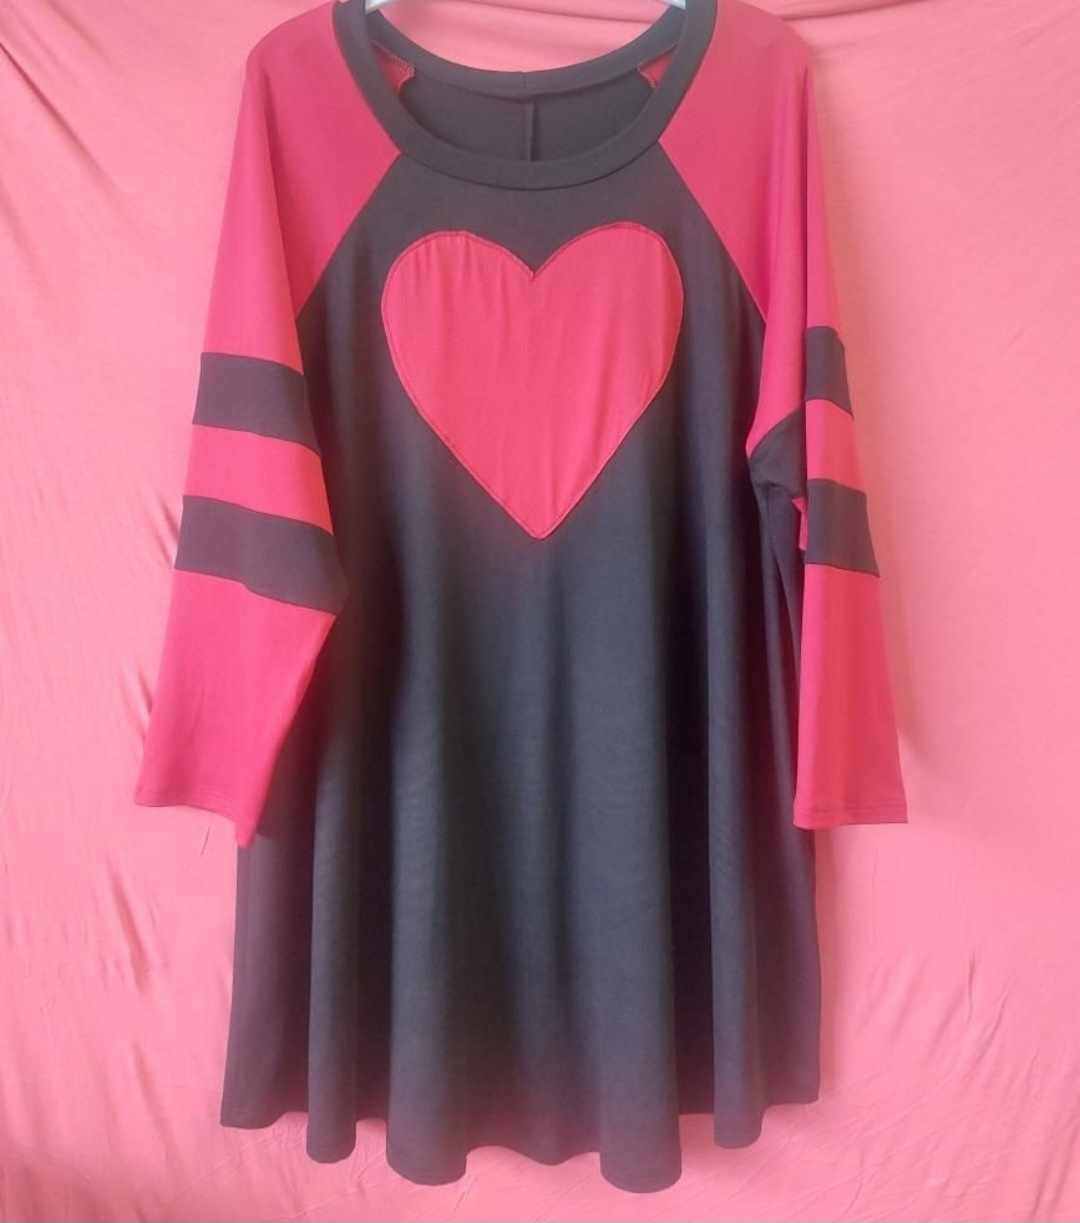 PSFU Black Red Heart <3 Shirt Tunic Top